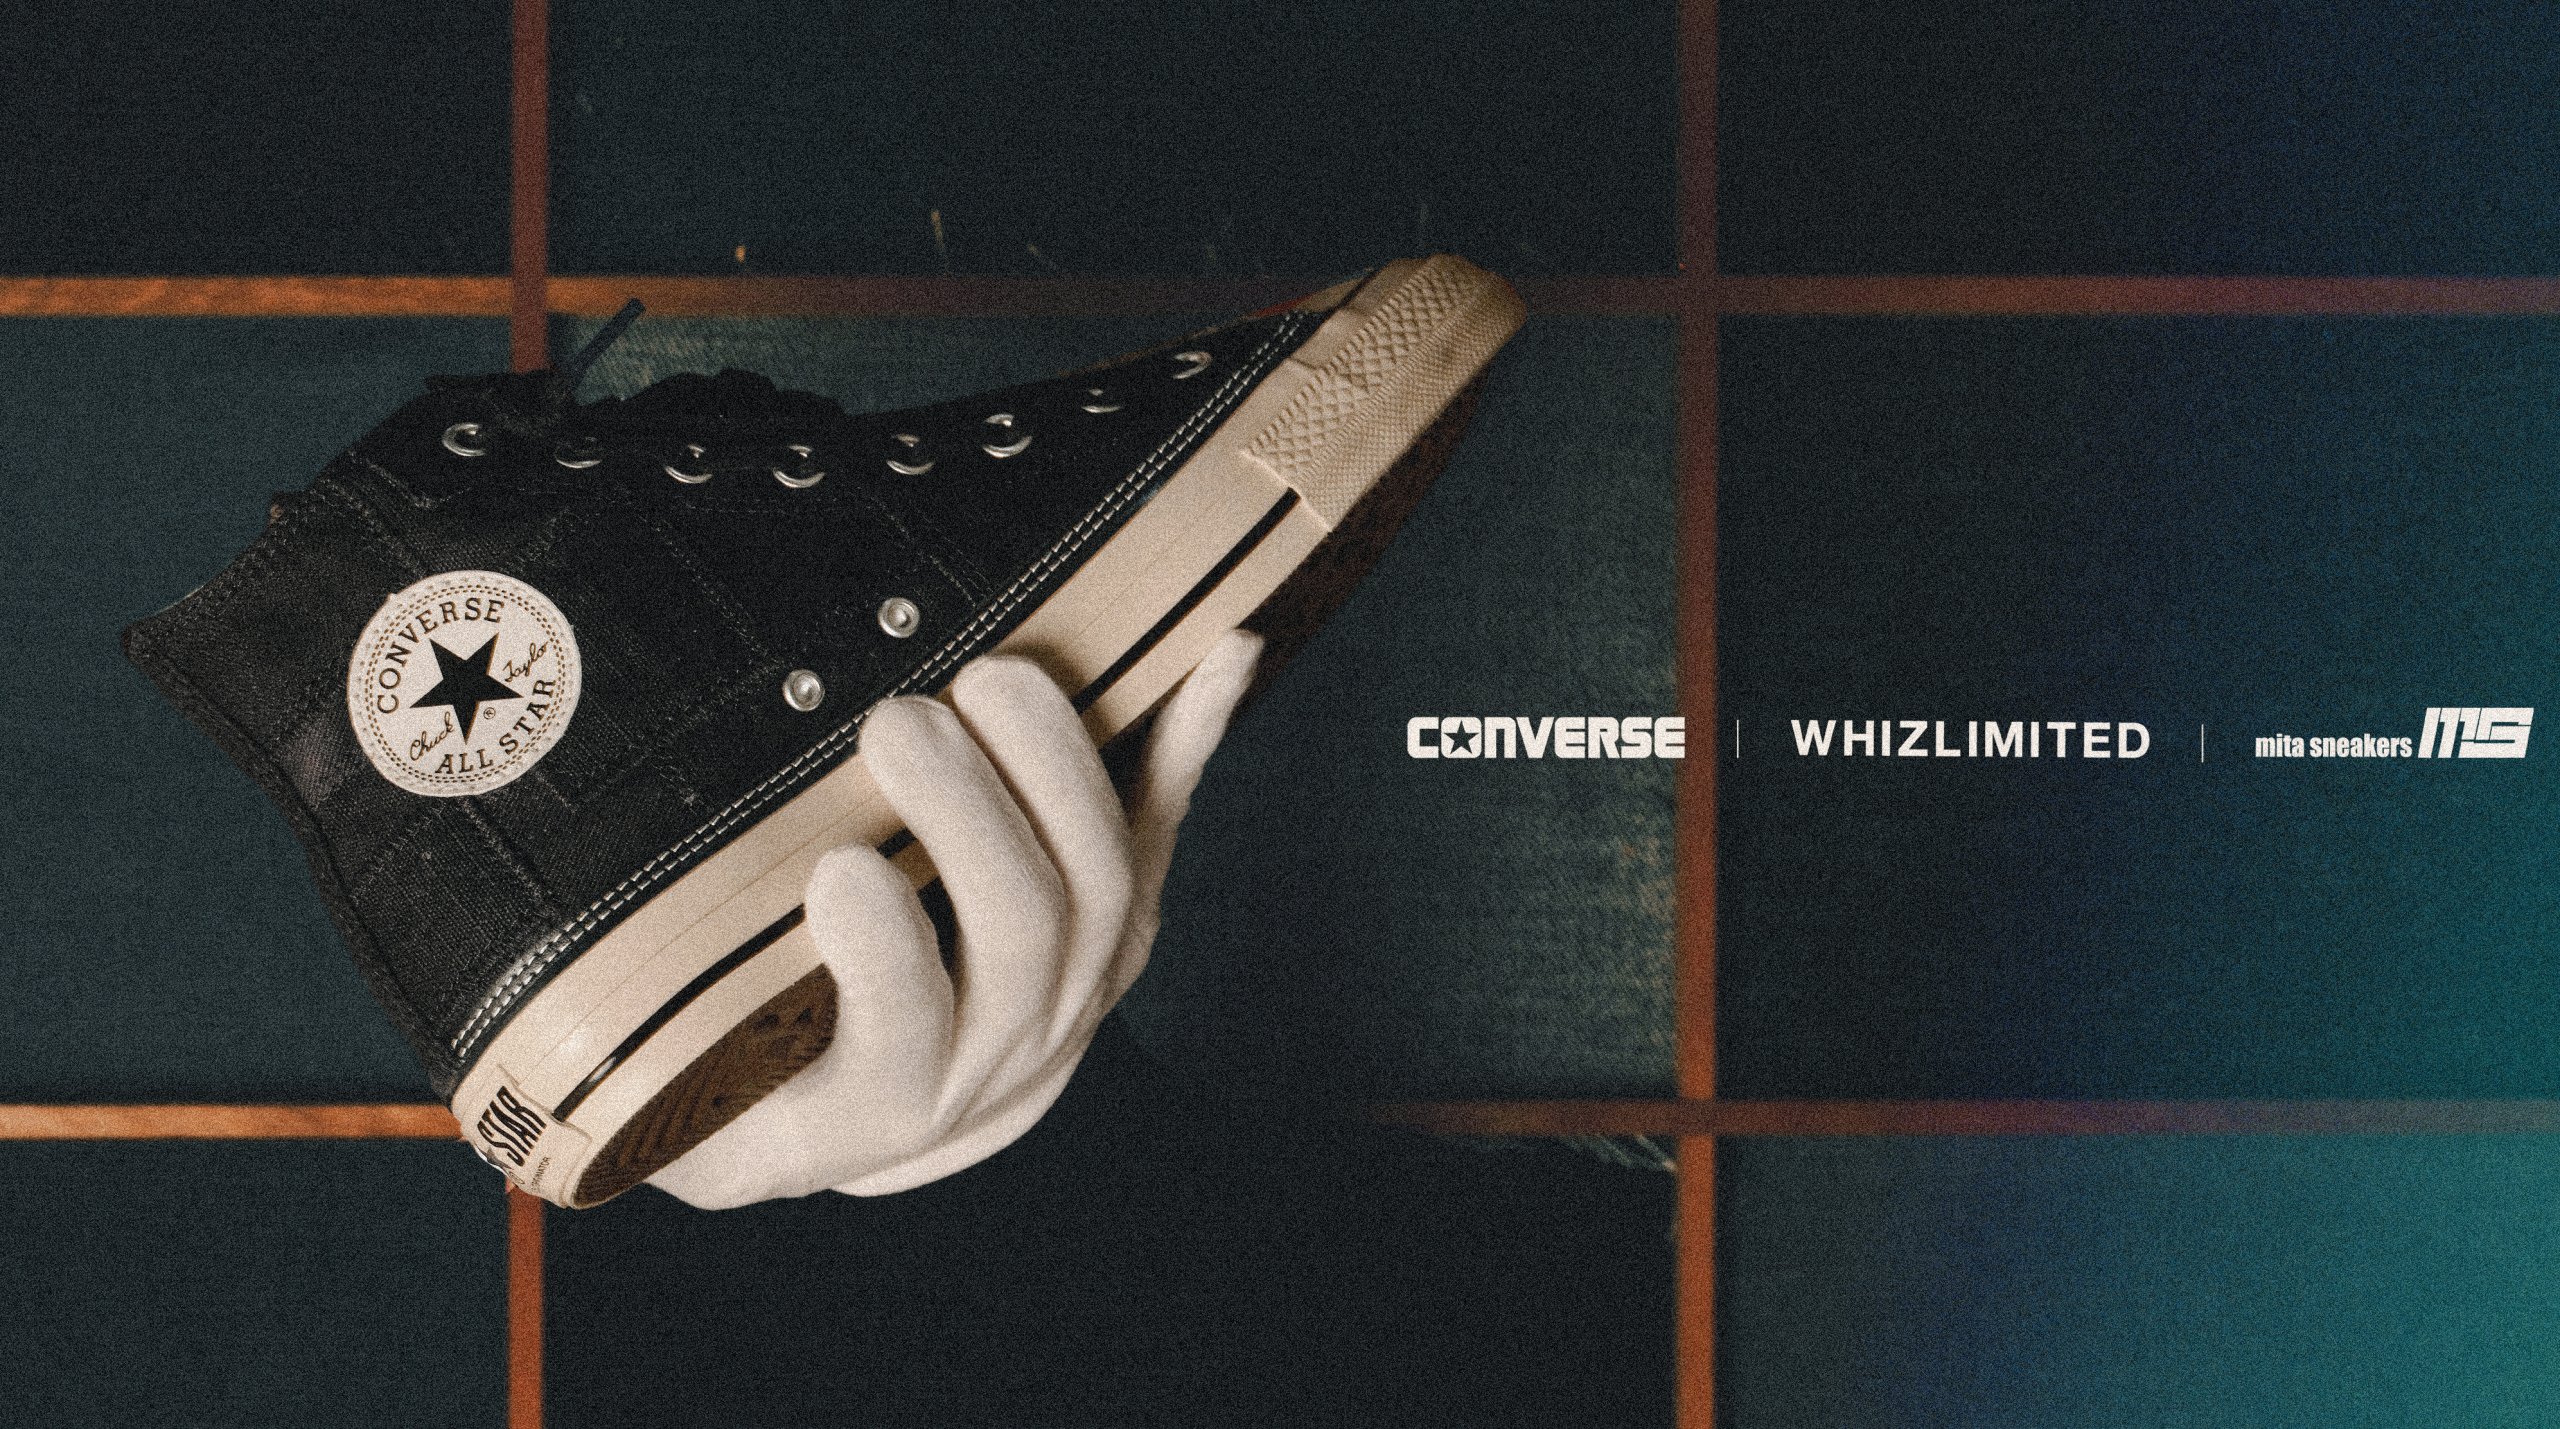 The Converse 